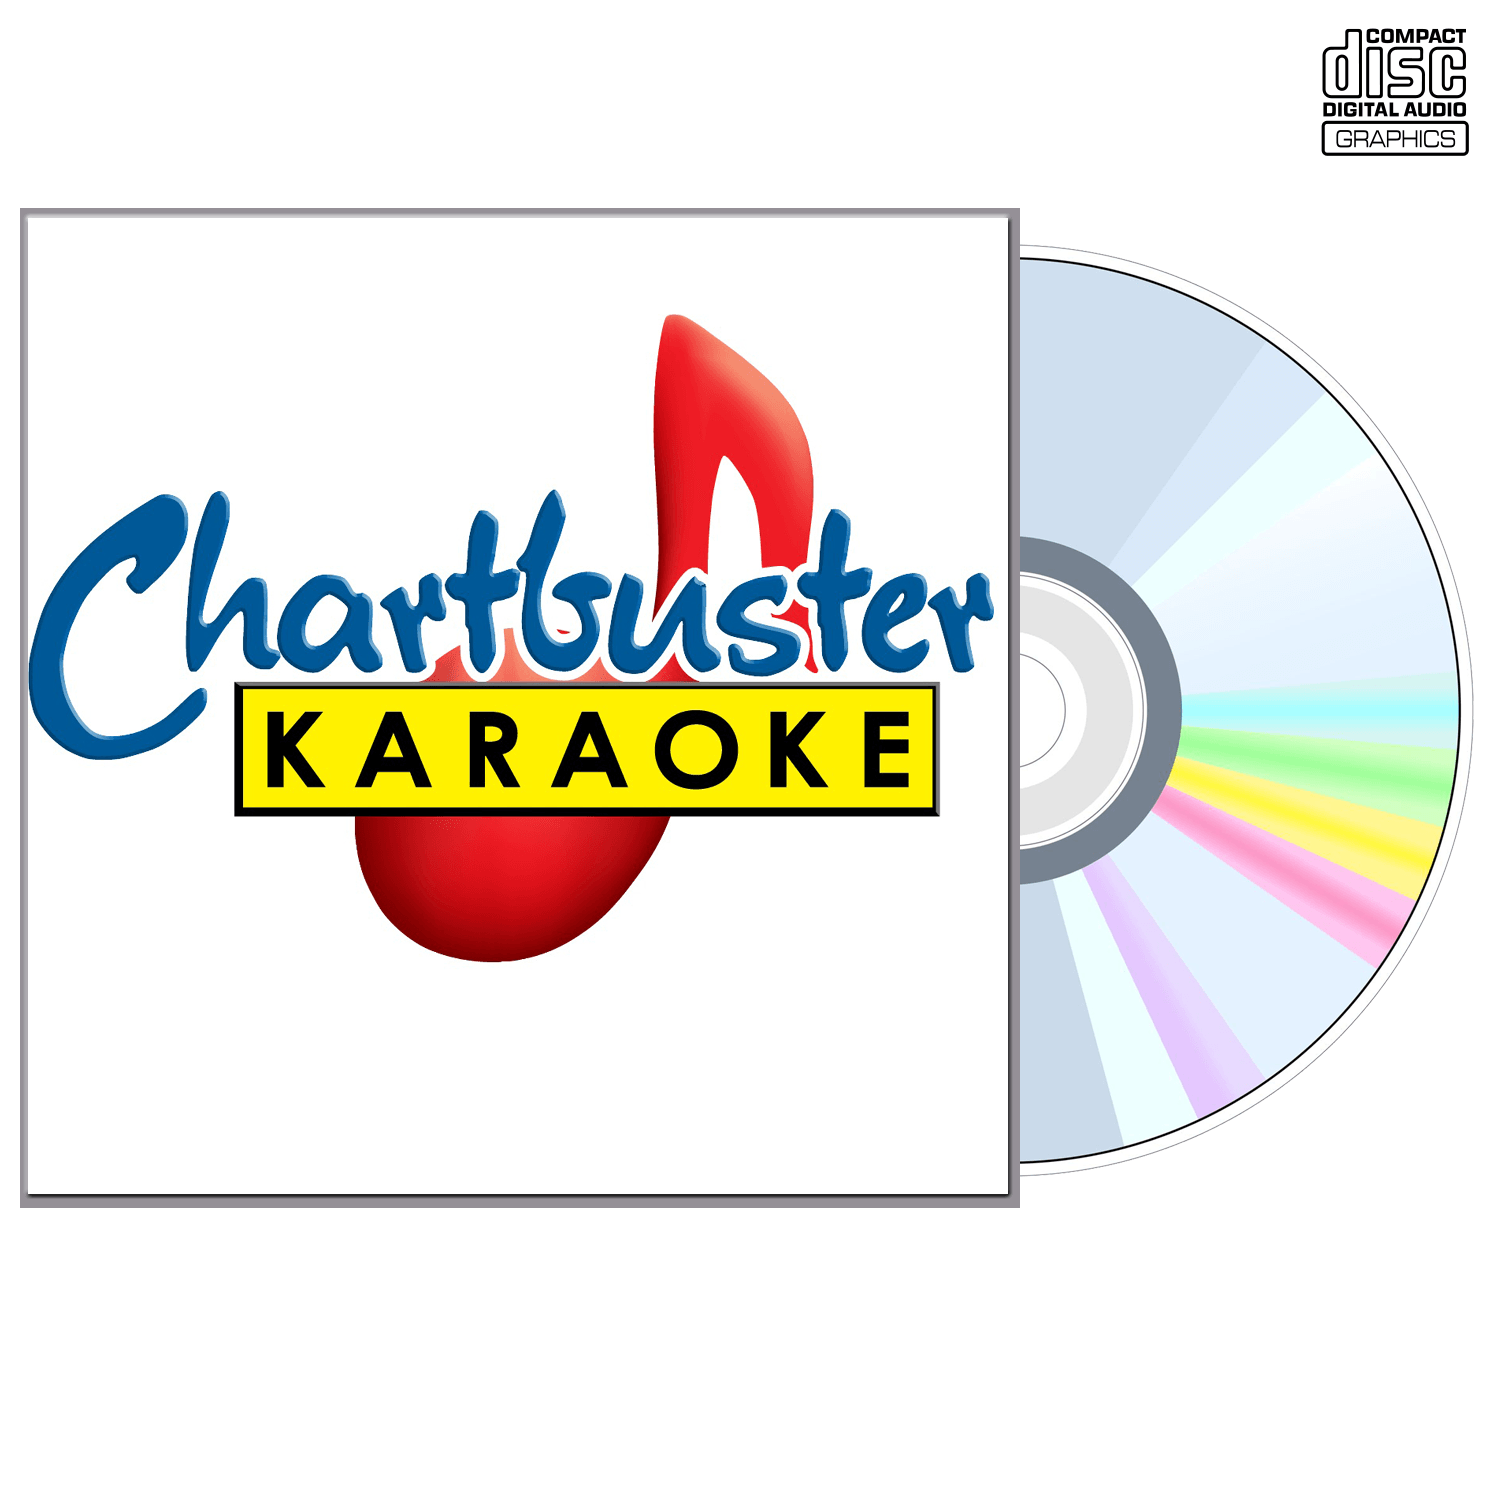 Glen Campbell - CD+G - Chartbuster Karaoke - Karaoke Home Entertainment